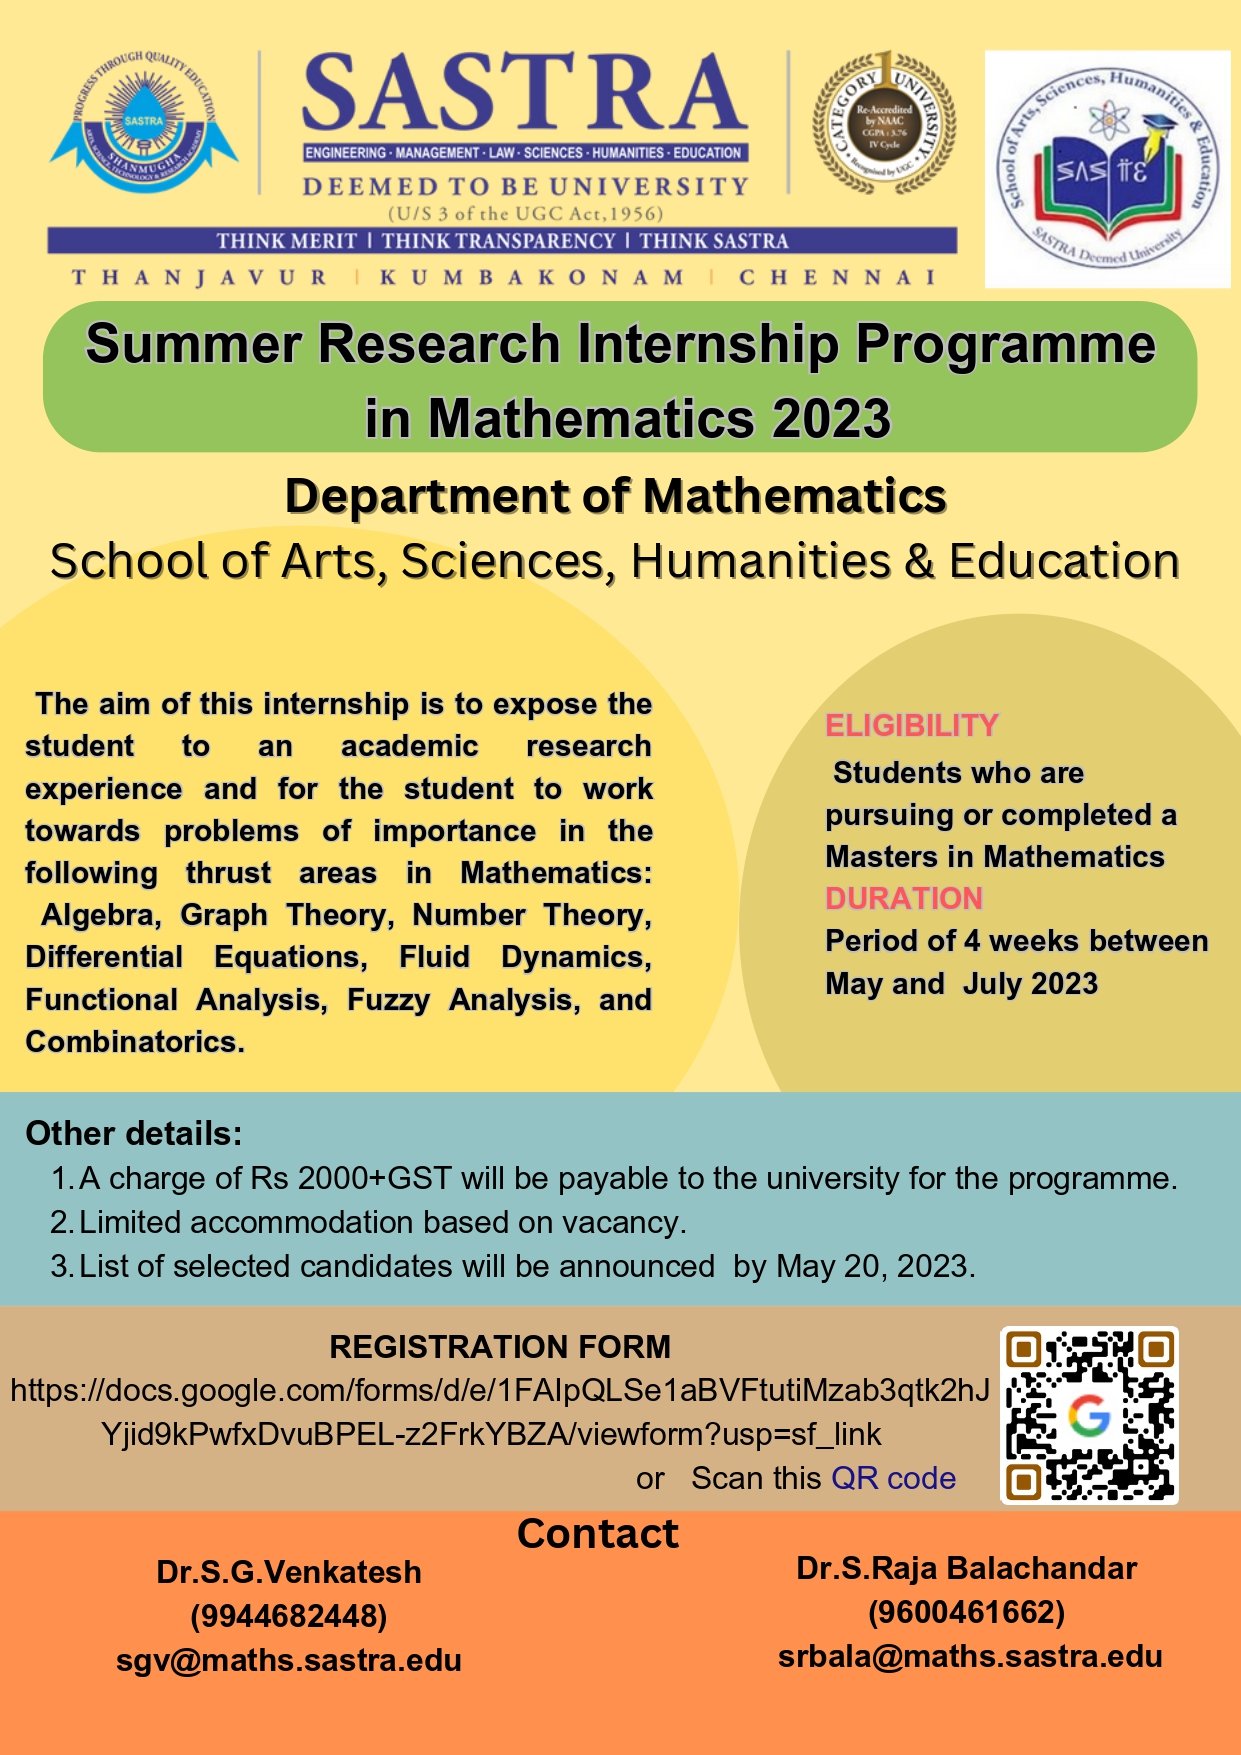 Summer Research Internship Programme, SASTRA University 2023, Application deadline: May 20, 2023